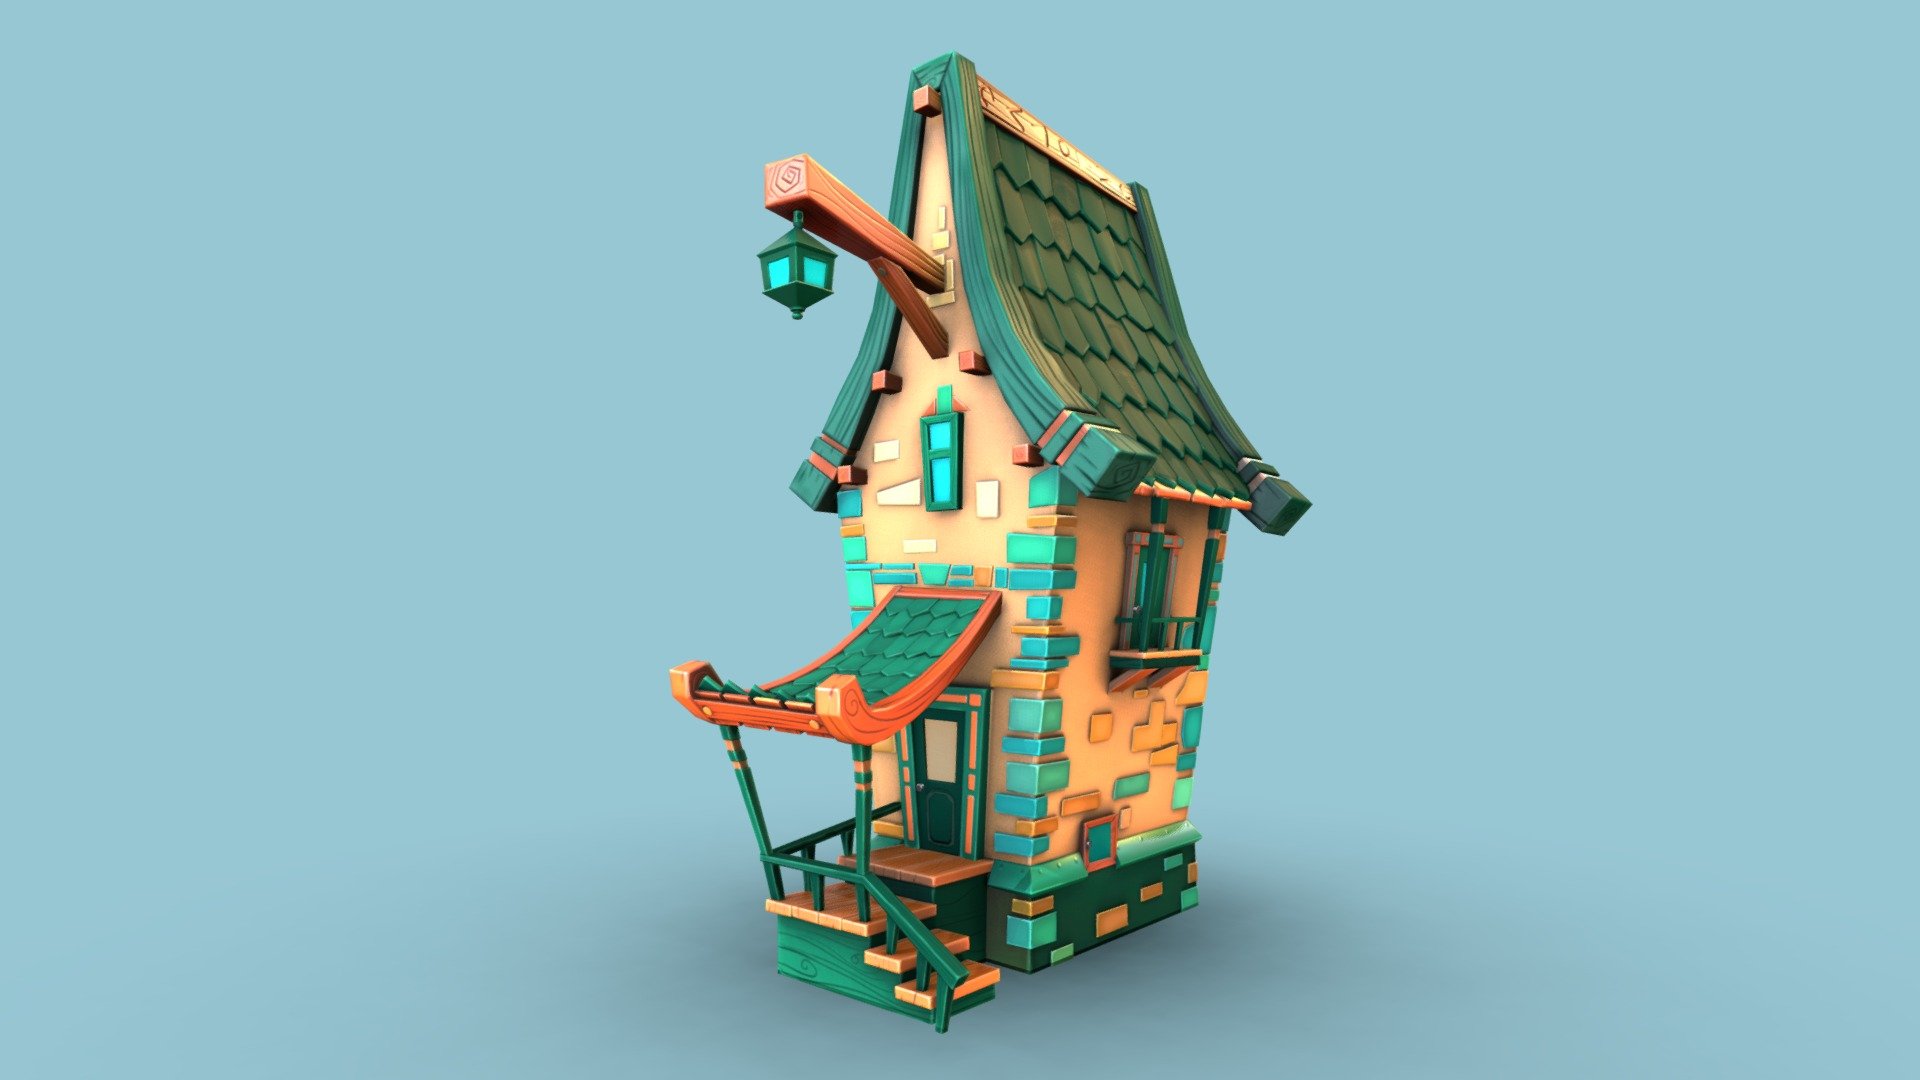 Concepted by Lena Novikova
https://www.artstation.com/artwork/n2Yko - Sweet home - 3D model by sadfrogfromnsk 3d model